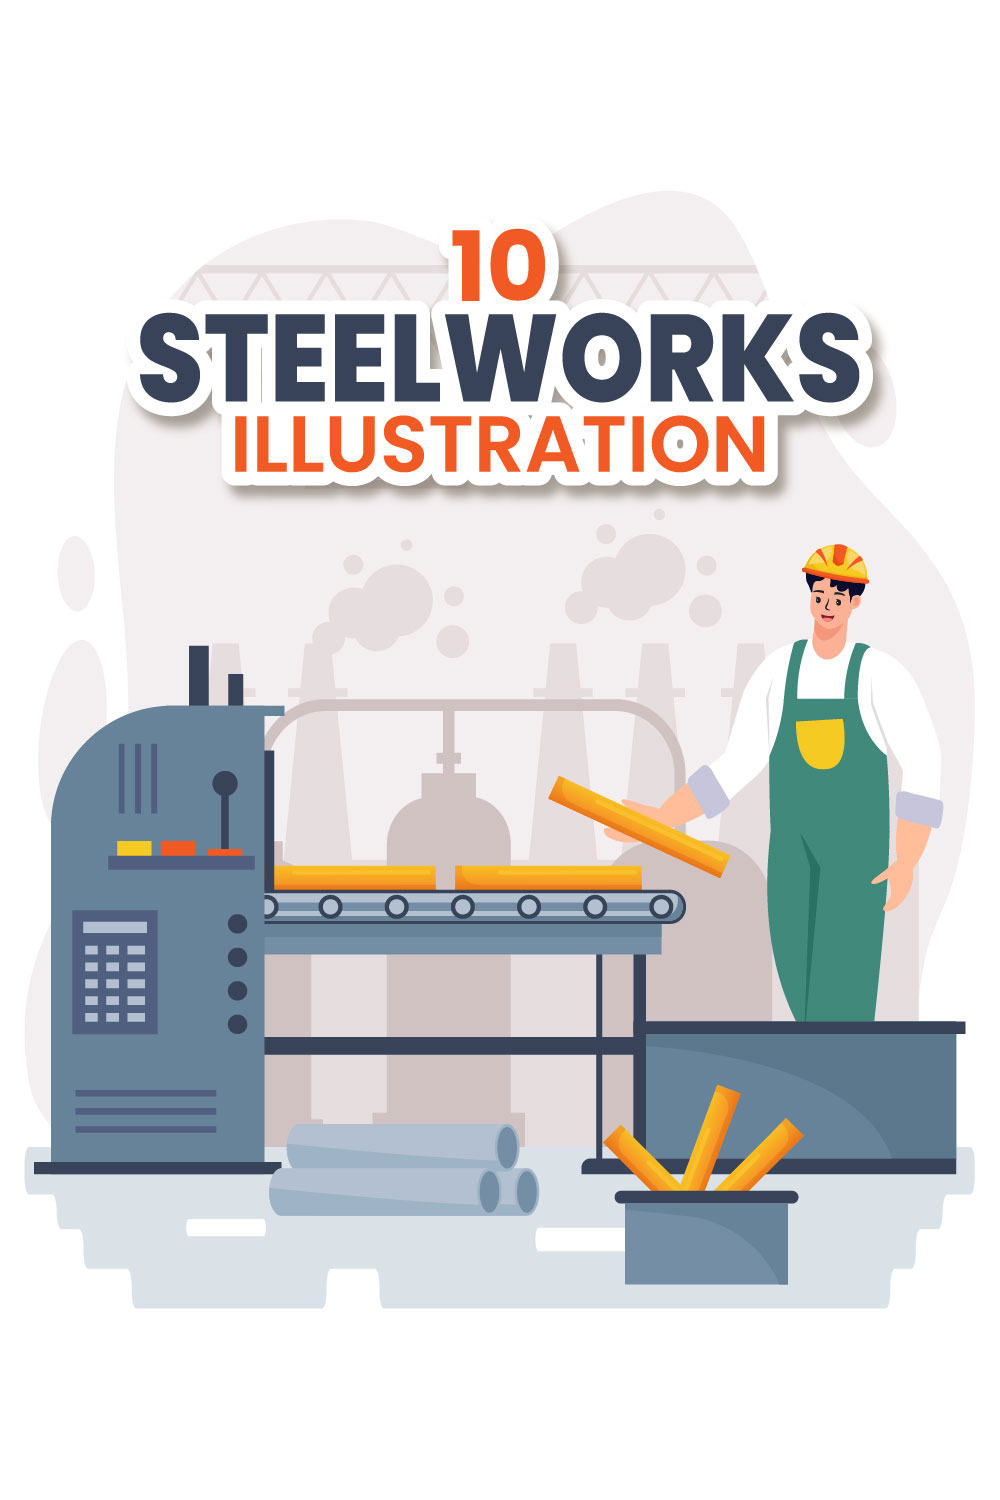 10 Steelworks Illustration pinterest preview image.